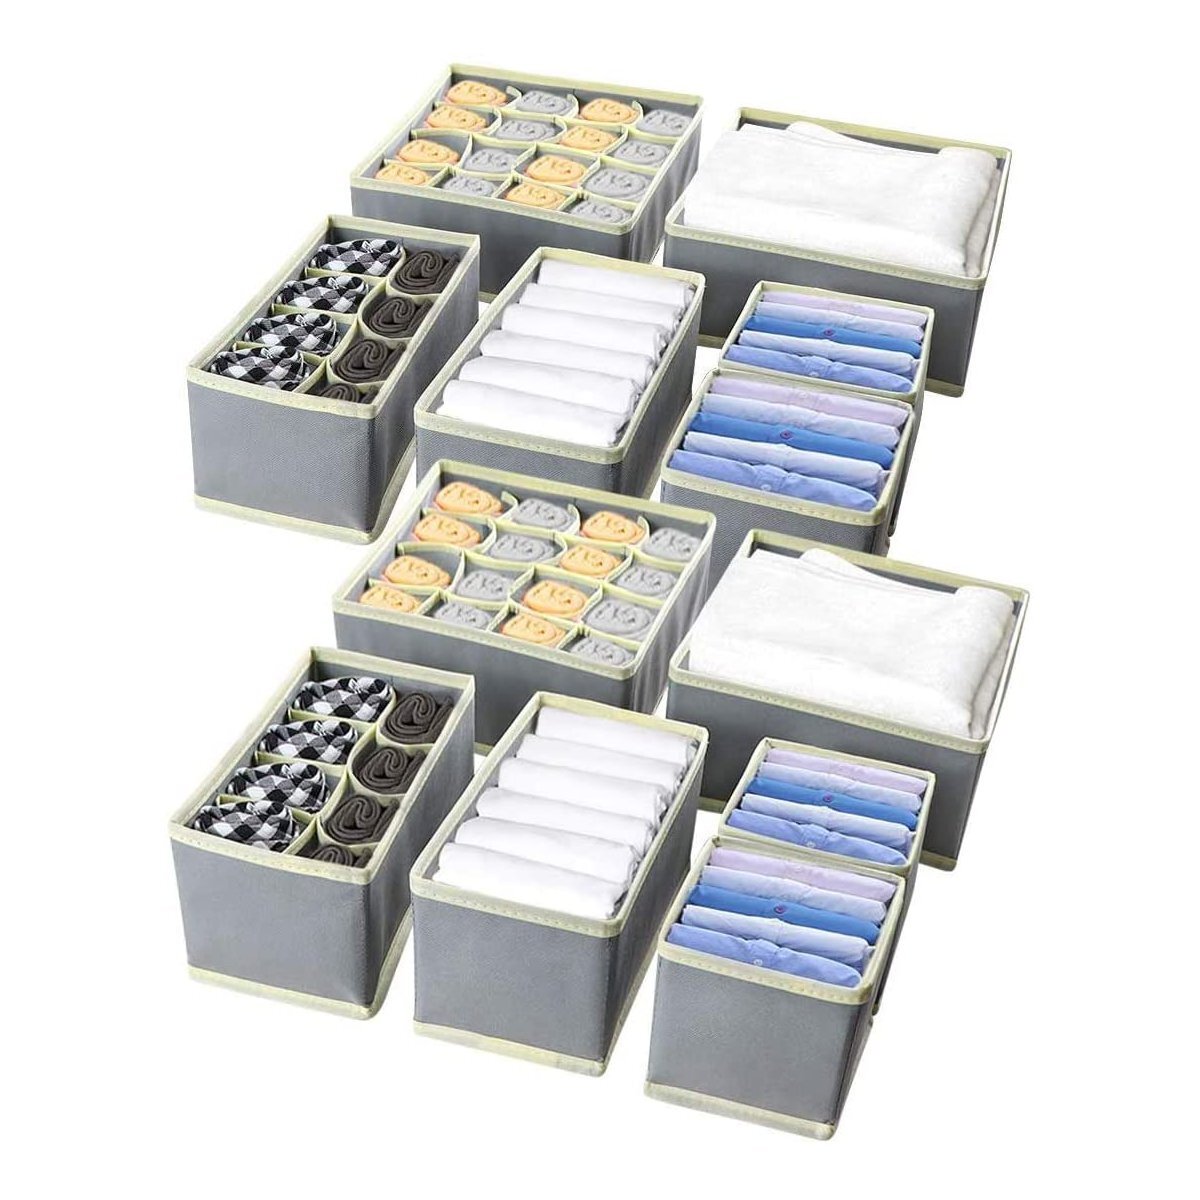 Rebrilliant Foldable Storage Box For Bras, Underwear, Socks, Neck